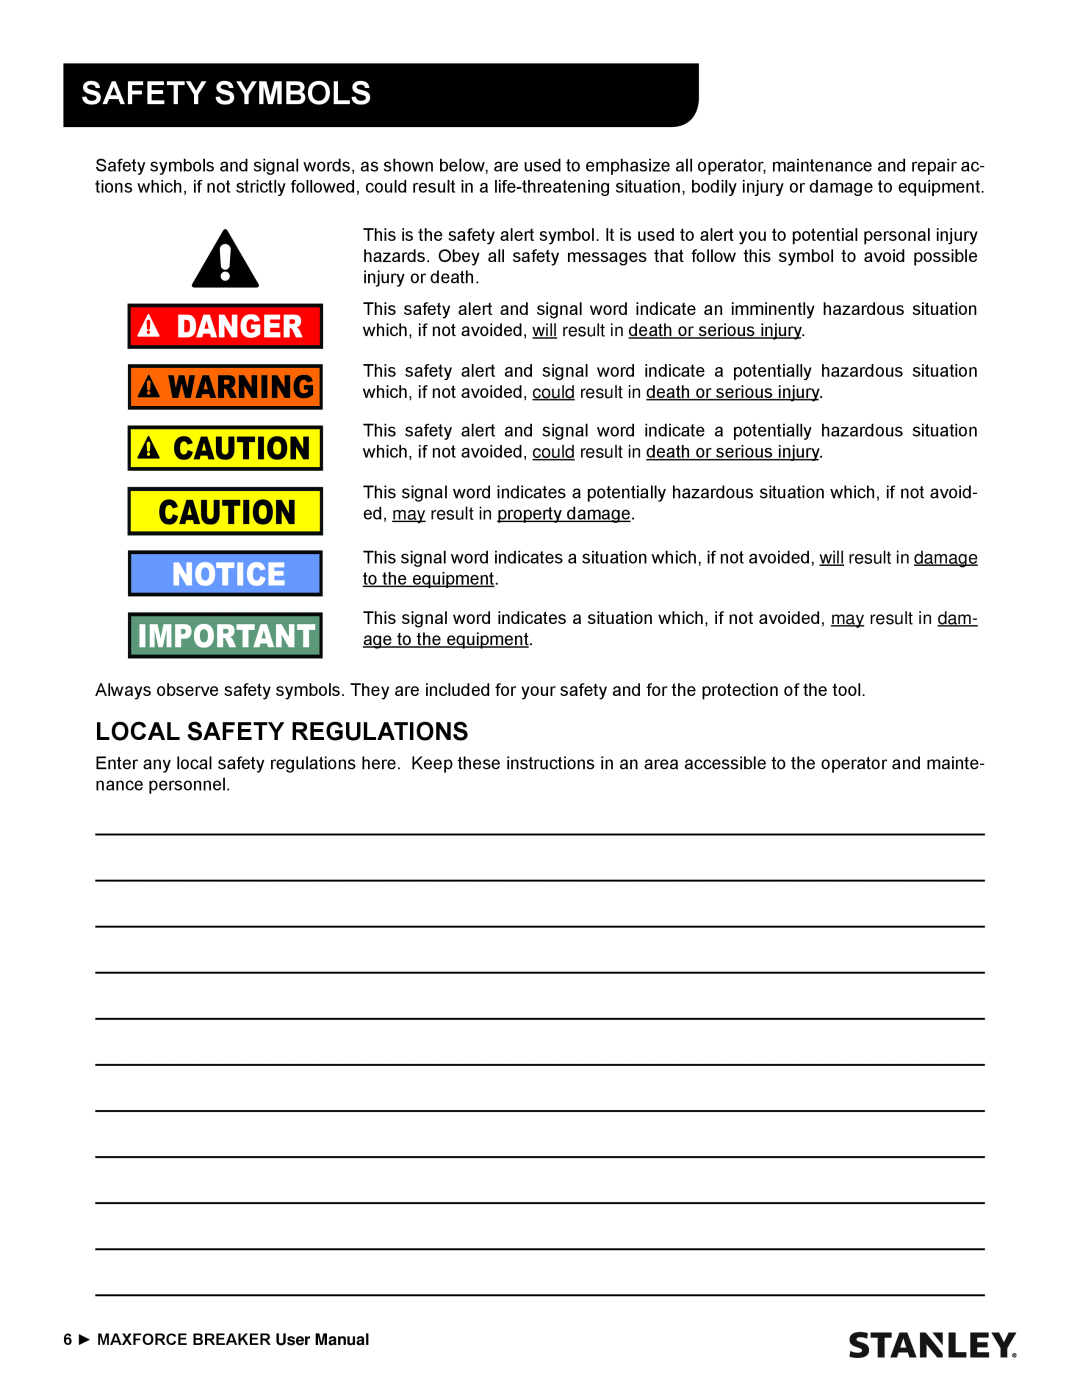 Stanley Black & Decker MBX138 thru MBX608 user manual Safety Symbols, Danger, Notice, Local Safety Regulations 